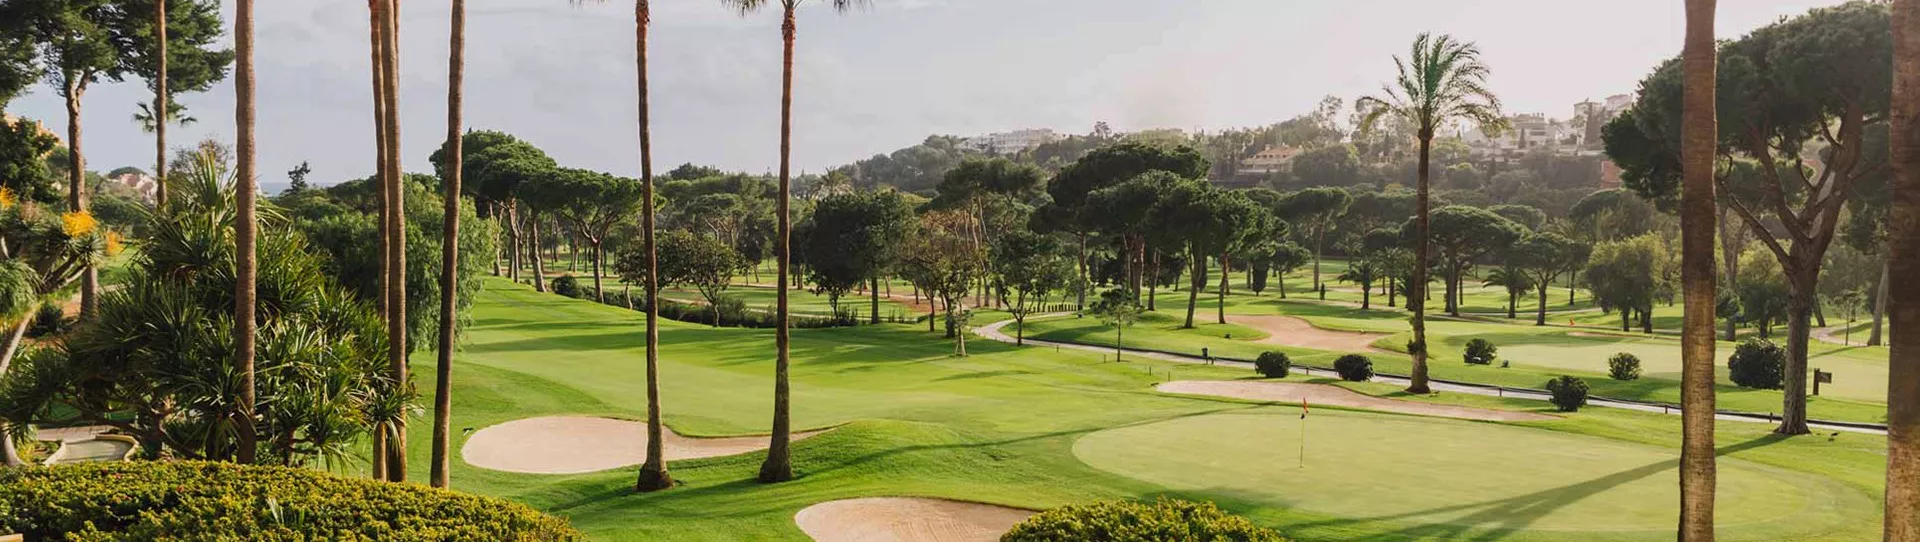 Spain golf holidays - Rio Real Golf Hotel - Photo 1